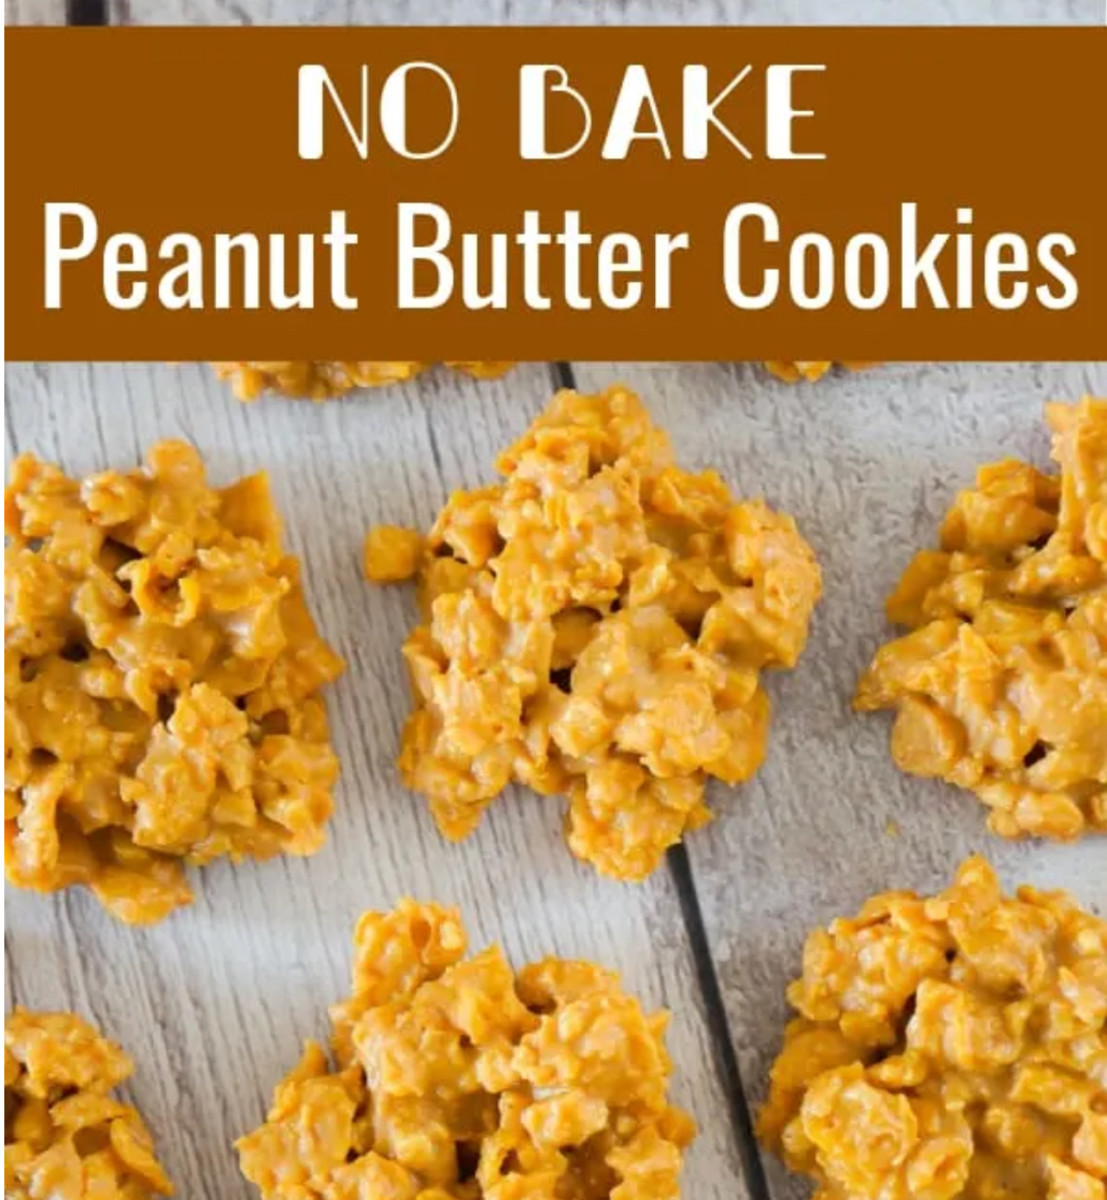 No-Bake Peanut Butter Cookies